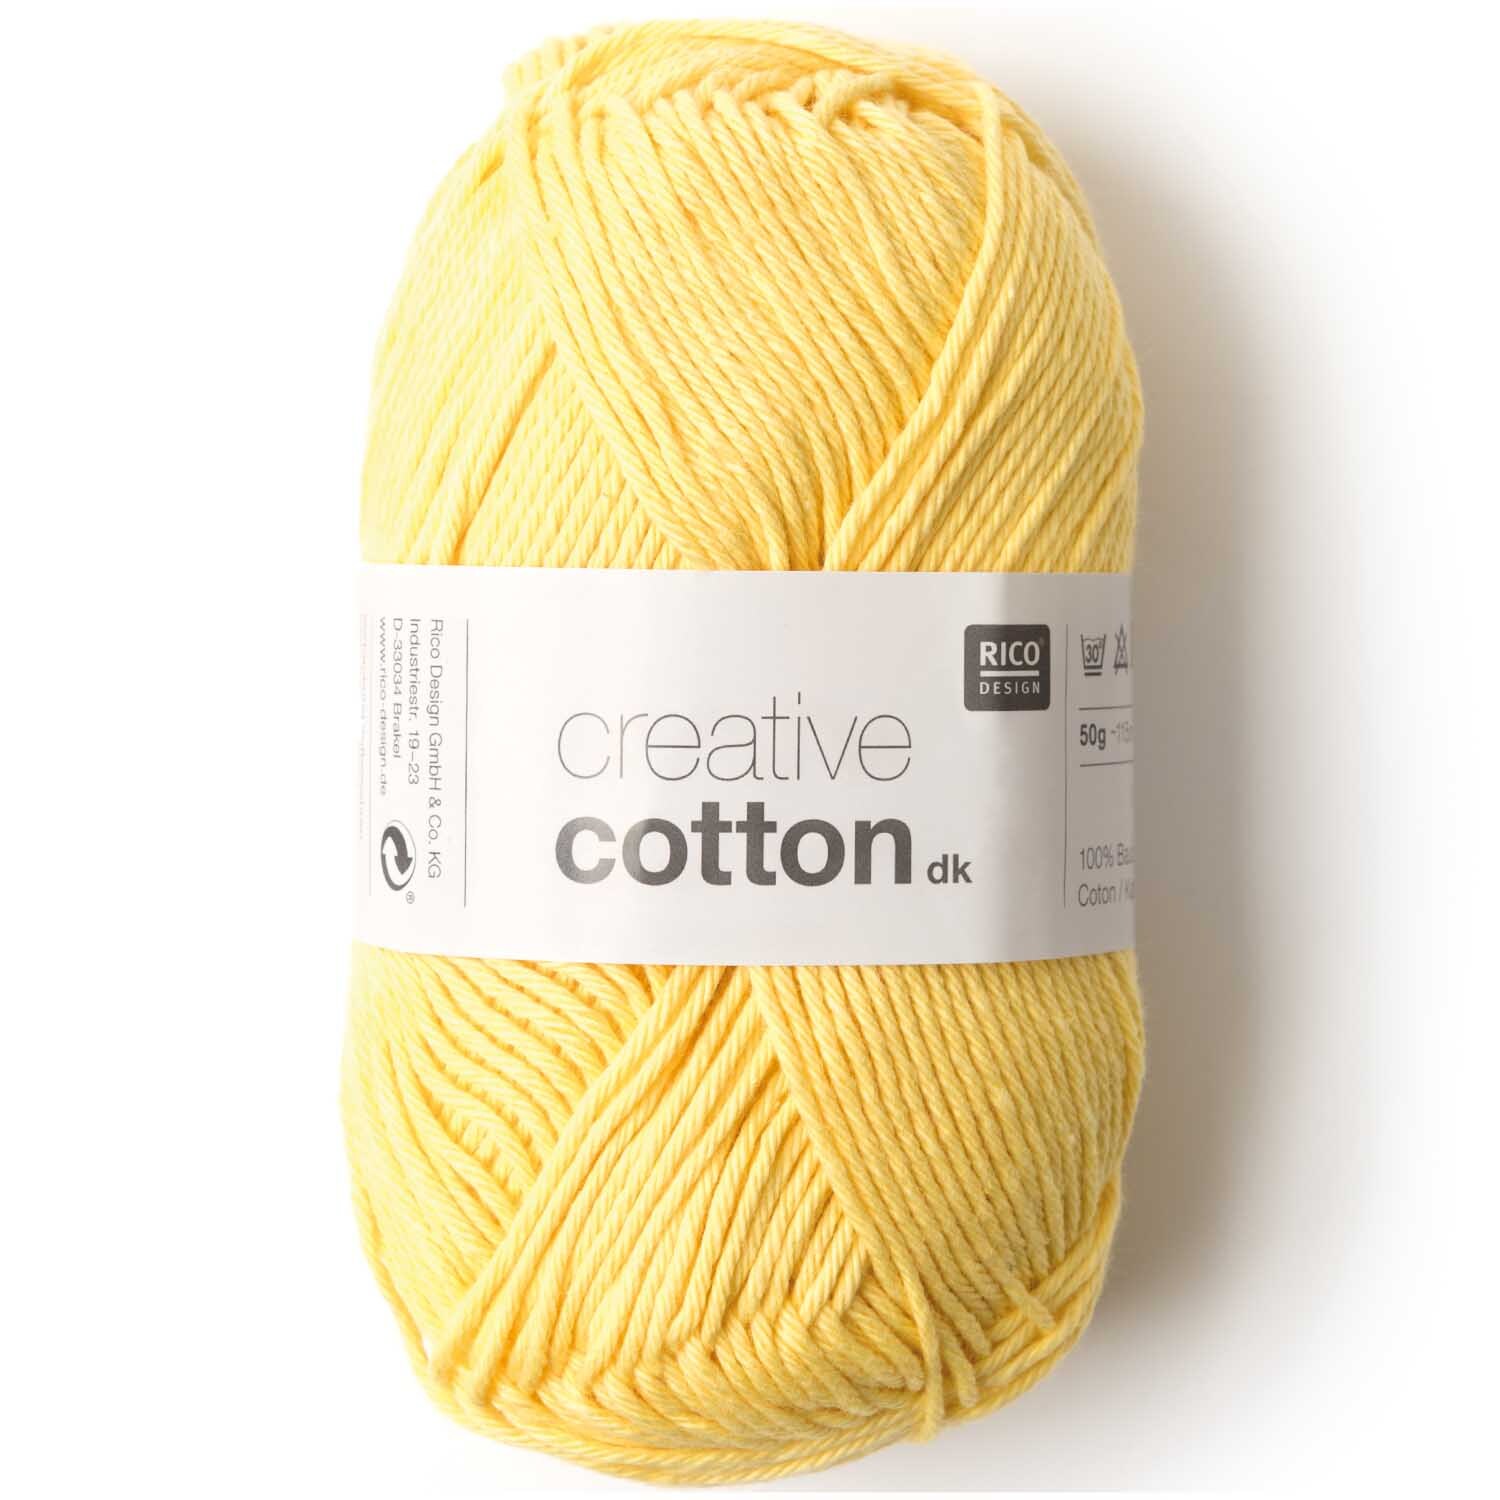 Creative Cotton dk